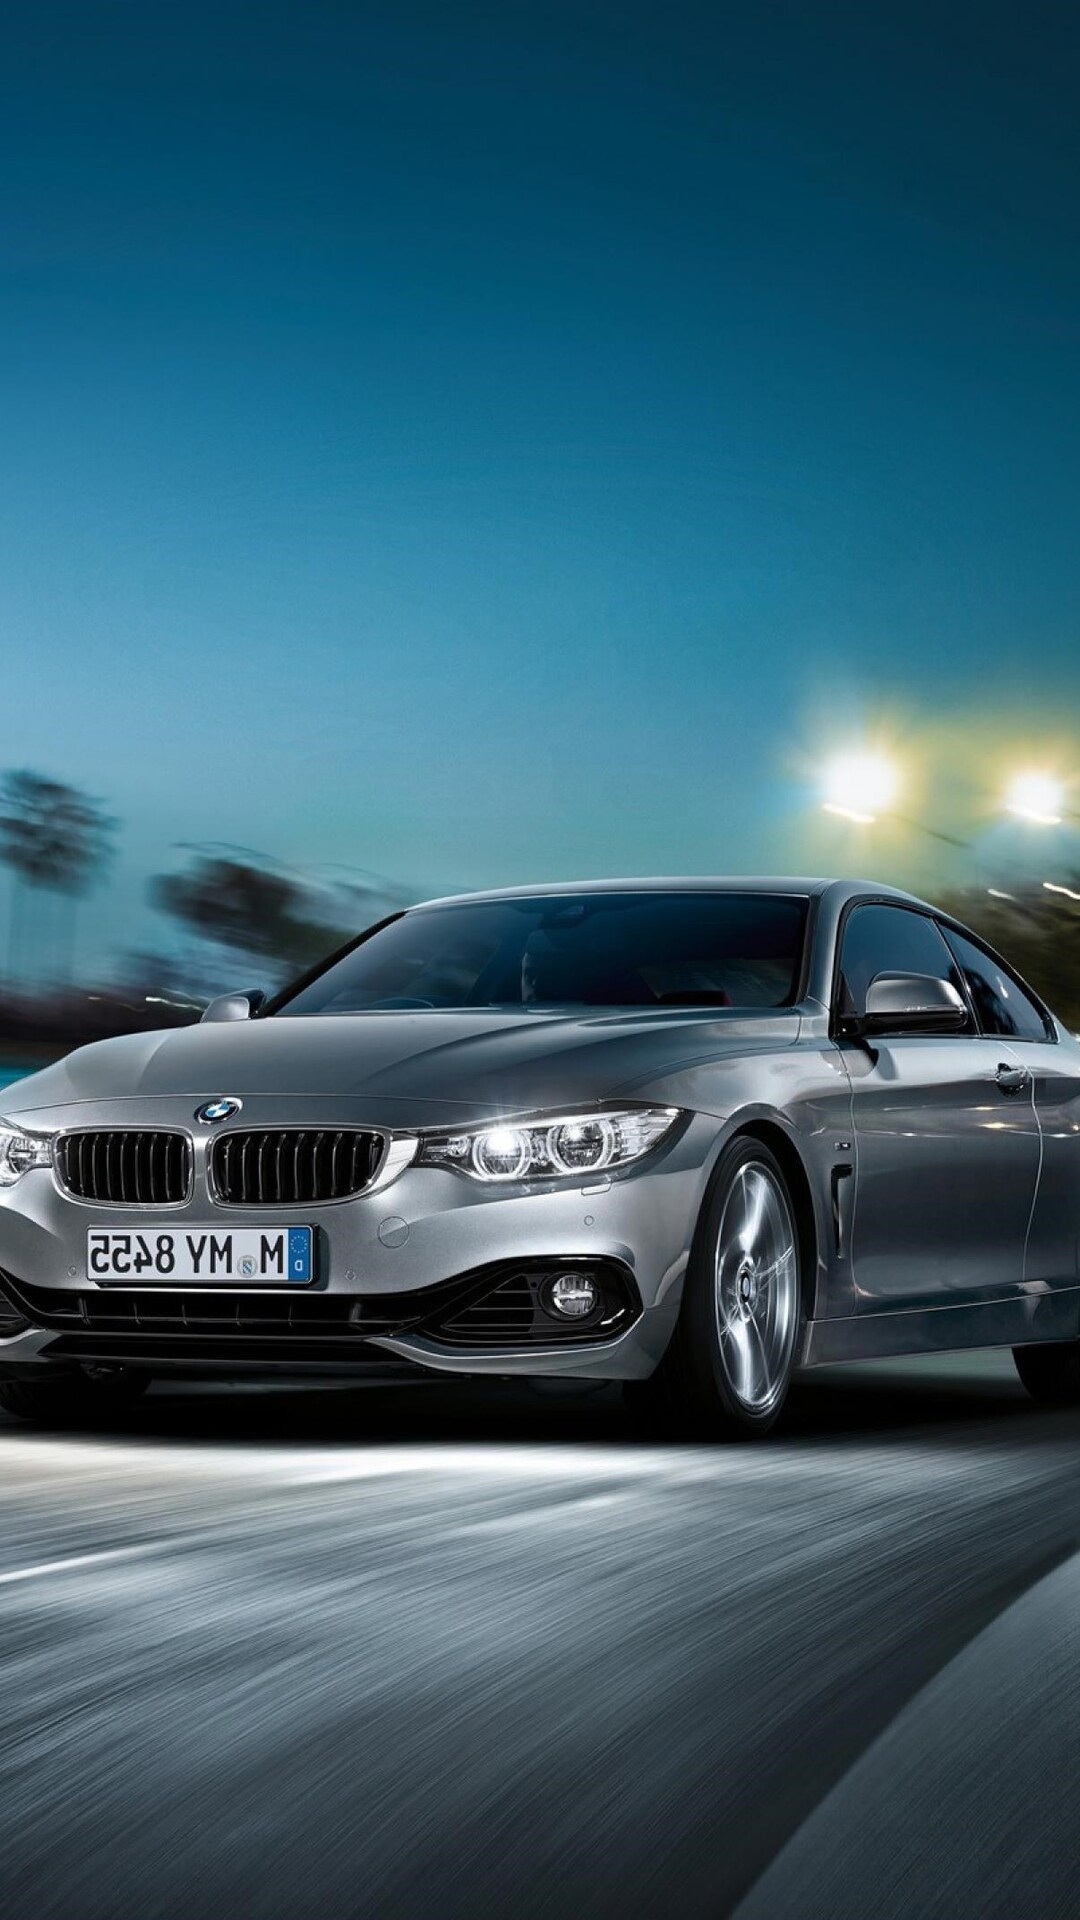 BMW 4 Series, Auto luxury performance, Sleek coupe design, Cutting-edge technology, 1080x1920 Full HD Phone